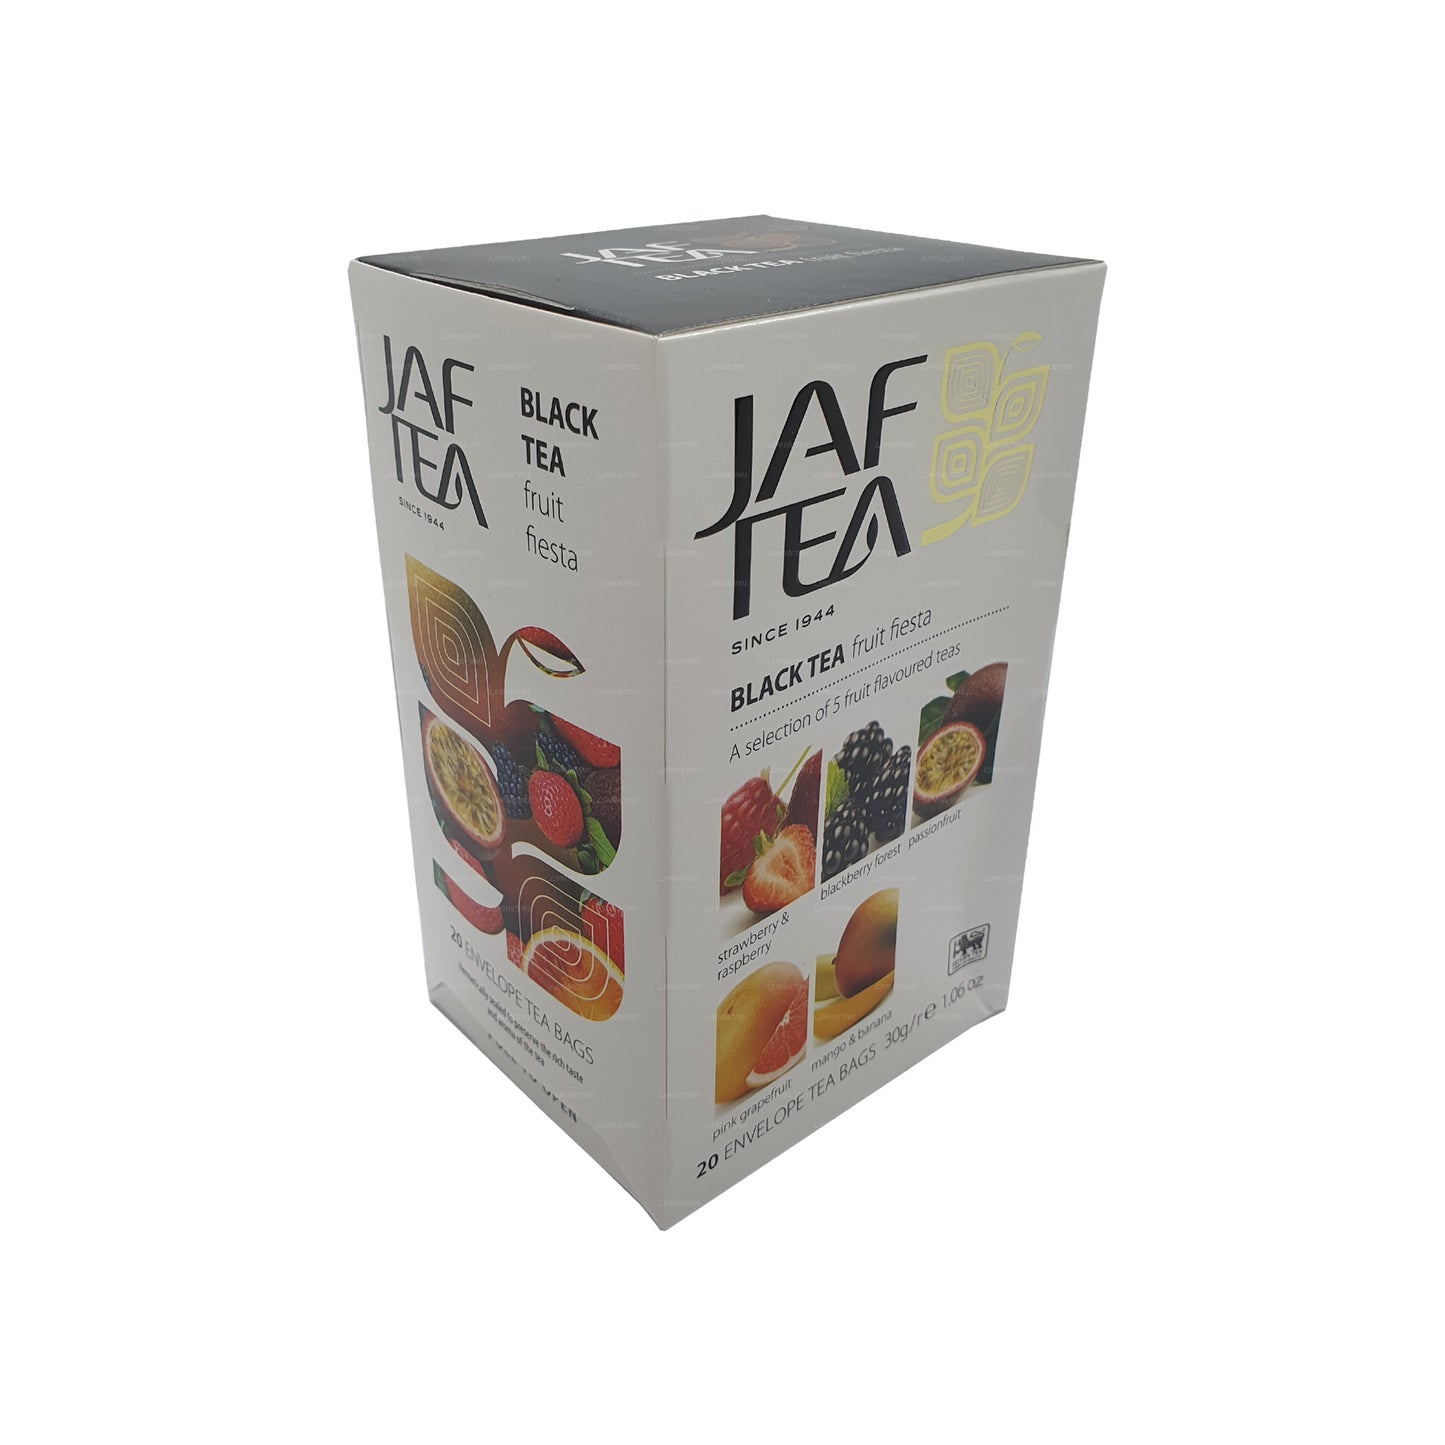 Jaf Tea Pure Fruits 系列红茶水果嘉年华 (30g) 20 个茶包